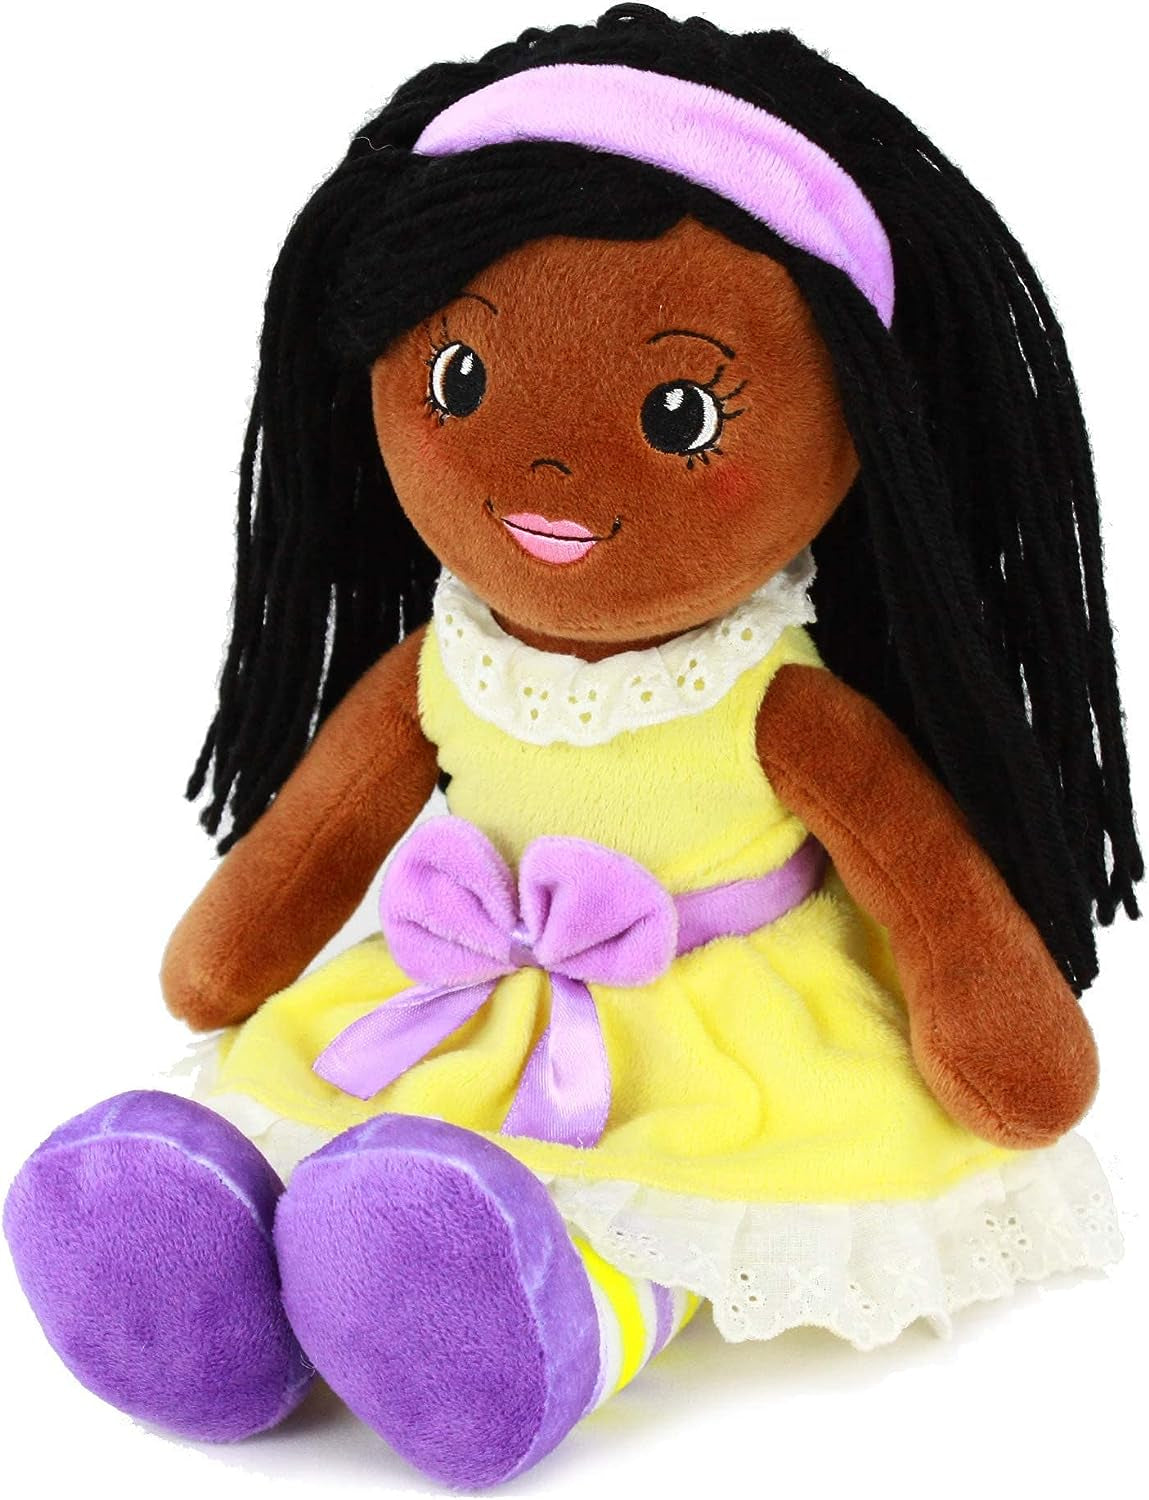 14" Soft Baby Doll - Plush Rag Dolls for 2 Year Old Girls & Boys, Toddler & Infants - Kaylie